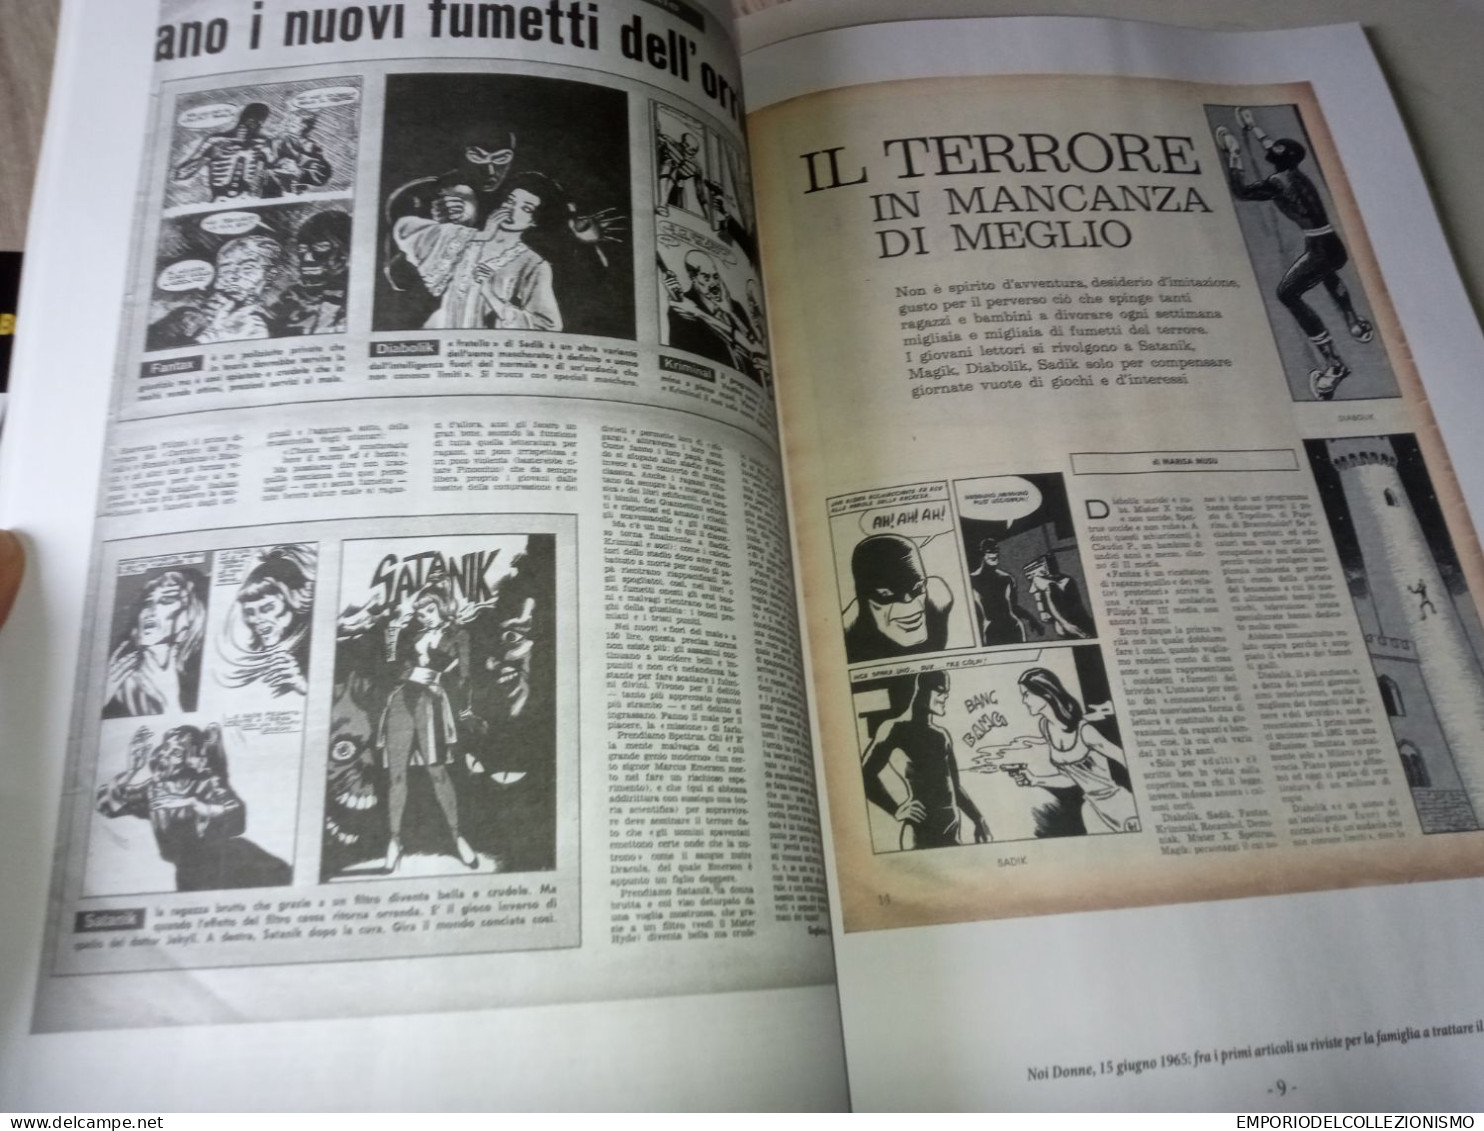 3 libri fumetti neri italiani diabolik kriminal satanik alika zakimort vamp demoniak sadik jnfernal killing genius bang